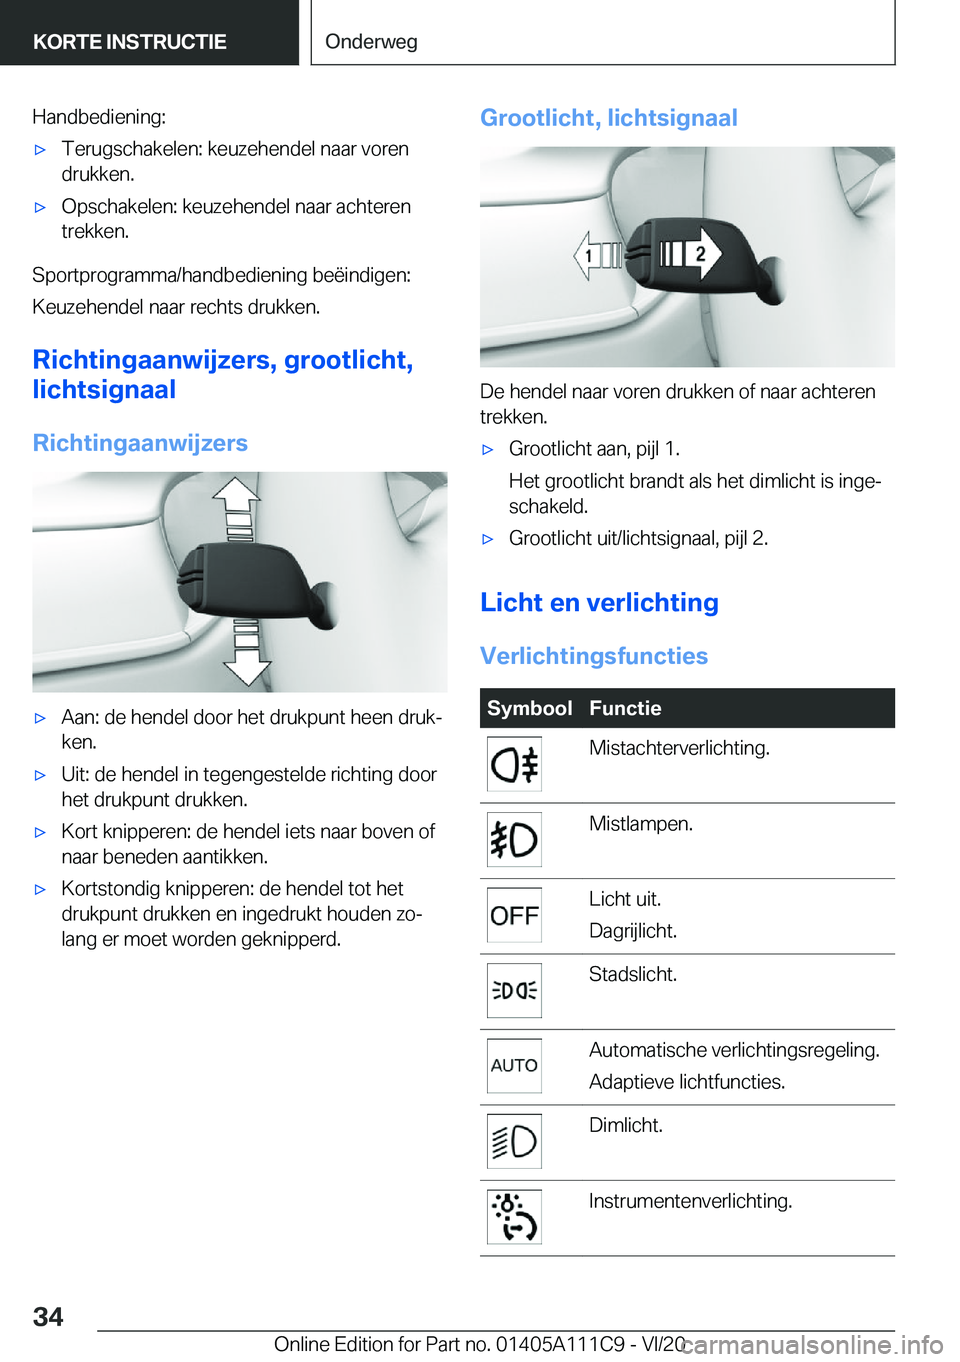 BMW 3 SERIES SEDAN PLUG-IN HYBRID 2021  Instructieboekjes (in Dutch) �H�a�n�d�b�e�d�i�e�n�i�n�g�:'x�T�e�r�u�g�s�c�h�a�k�e�l�e�n�:��k�e�u�z�e�h�e�n�d�e�l��n�a�a�r��v�o�r�e�n
�d�r�u�k�k�e�n�.'x�O�p�s�c�h�a�k�e�l�e�n�:��k�e�u�z�e�h�e�n�d�e�l��n�a�a�r��a�c�h�